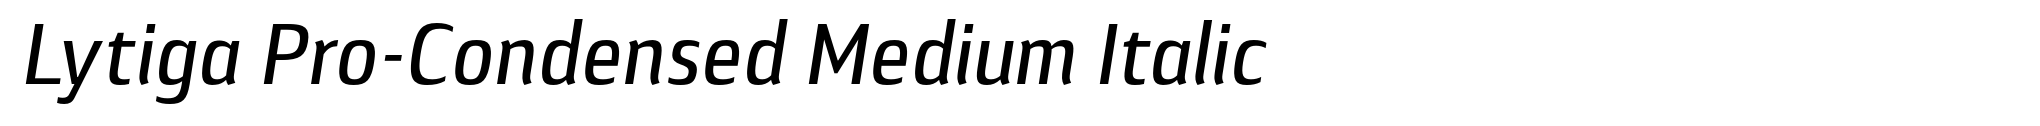 Lytiga Pro-Condensed Medium Italic image